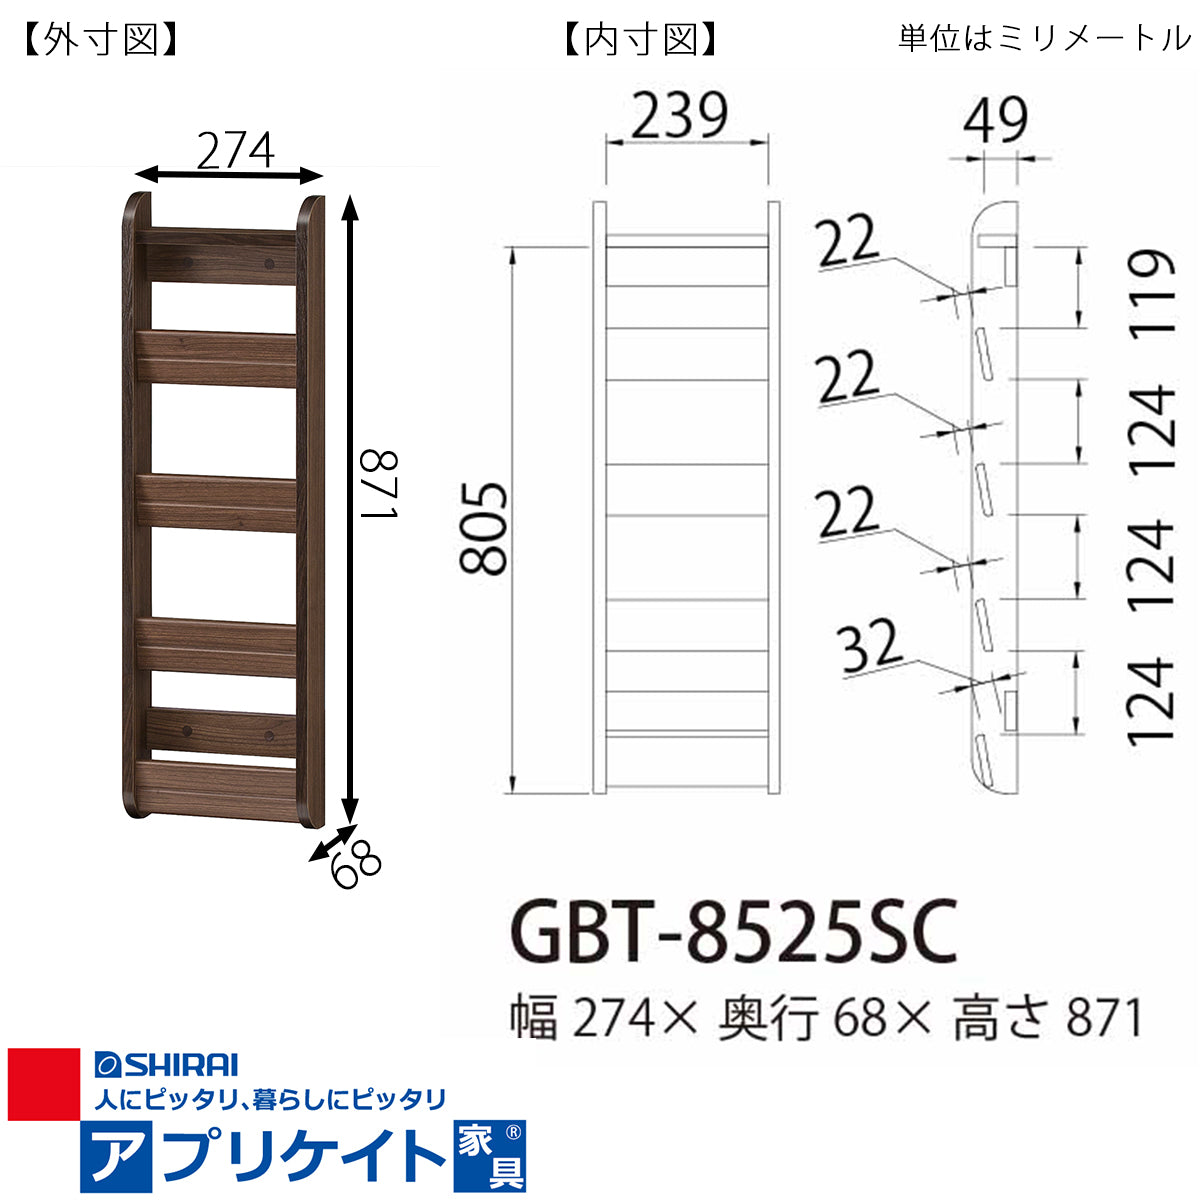 SHIRAI Garbarton Slipper Rack GBT-8525SC